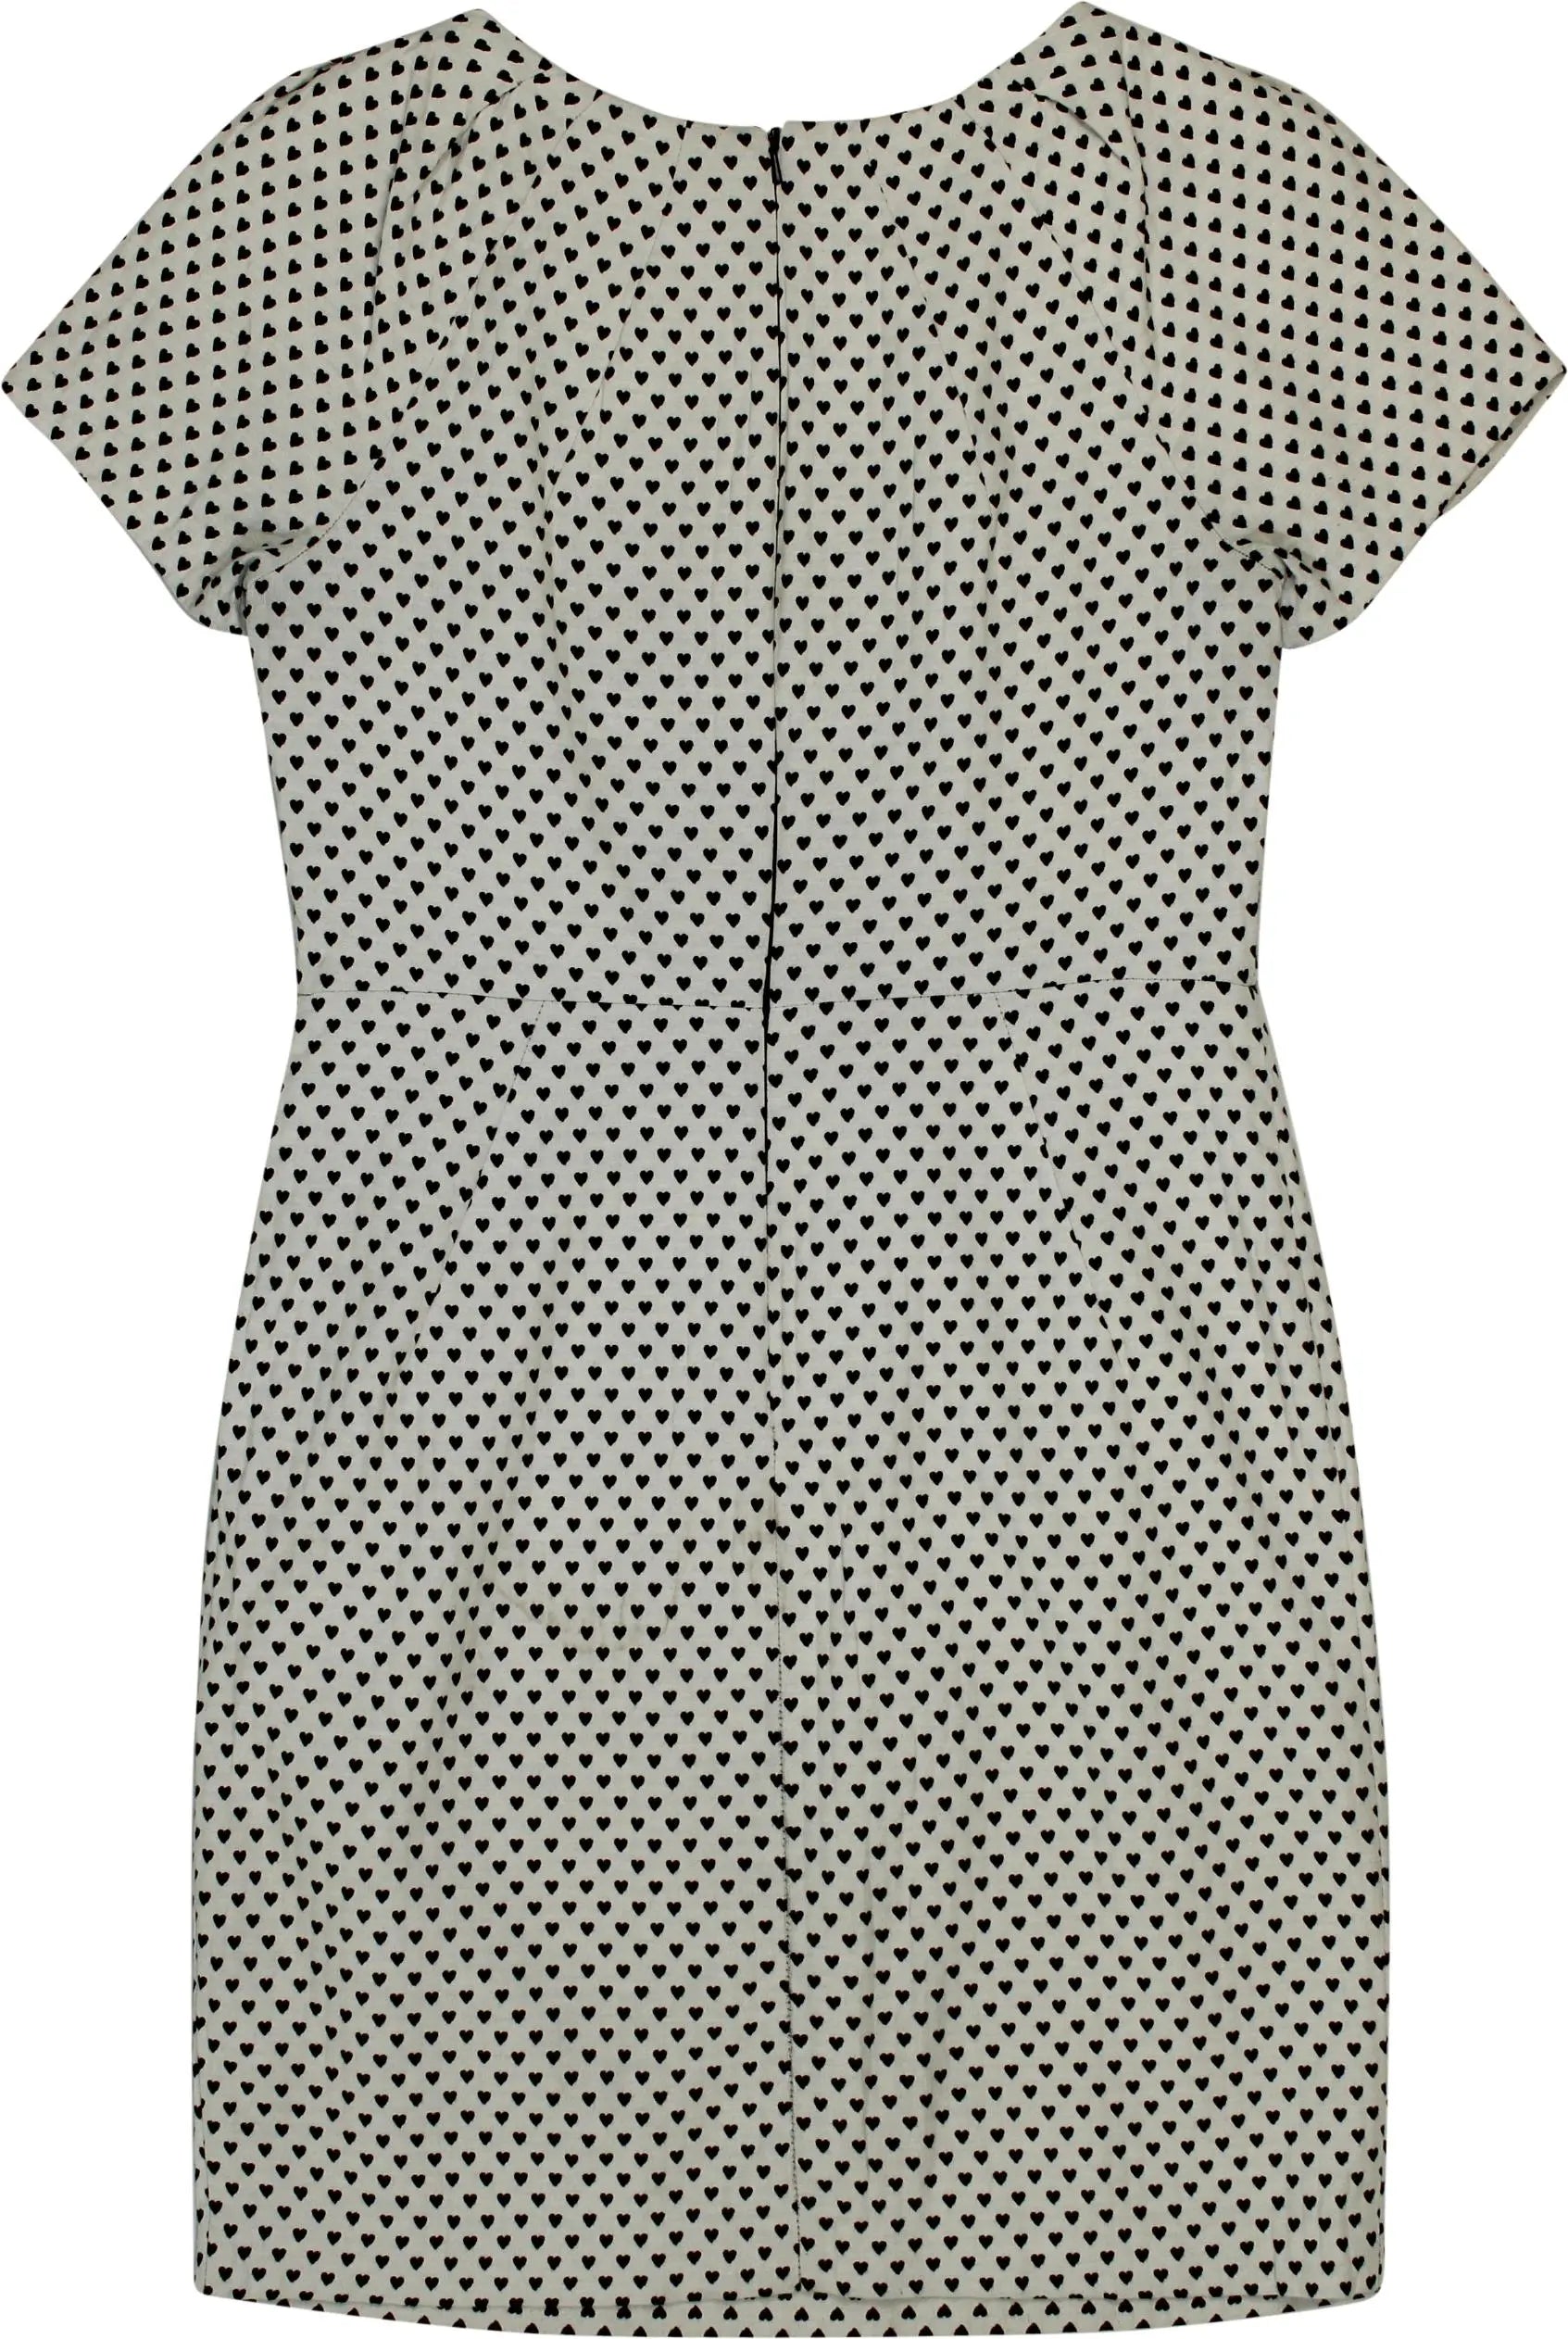 Steps - Patterned Dress- ThriftTale.com - Vintage and second handclothing